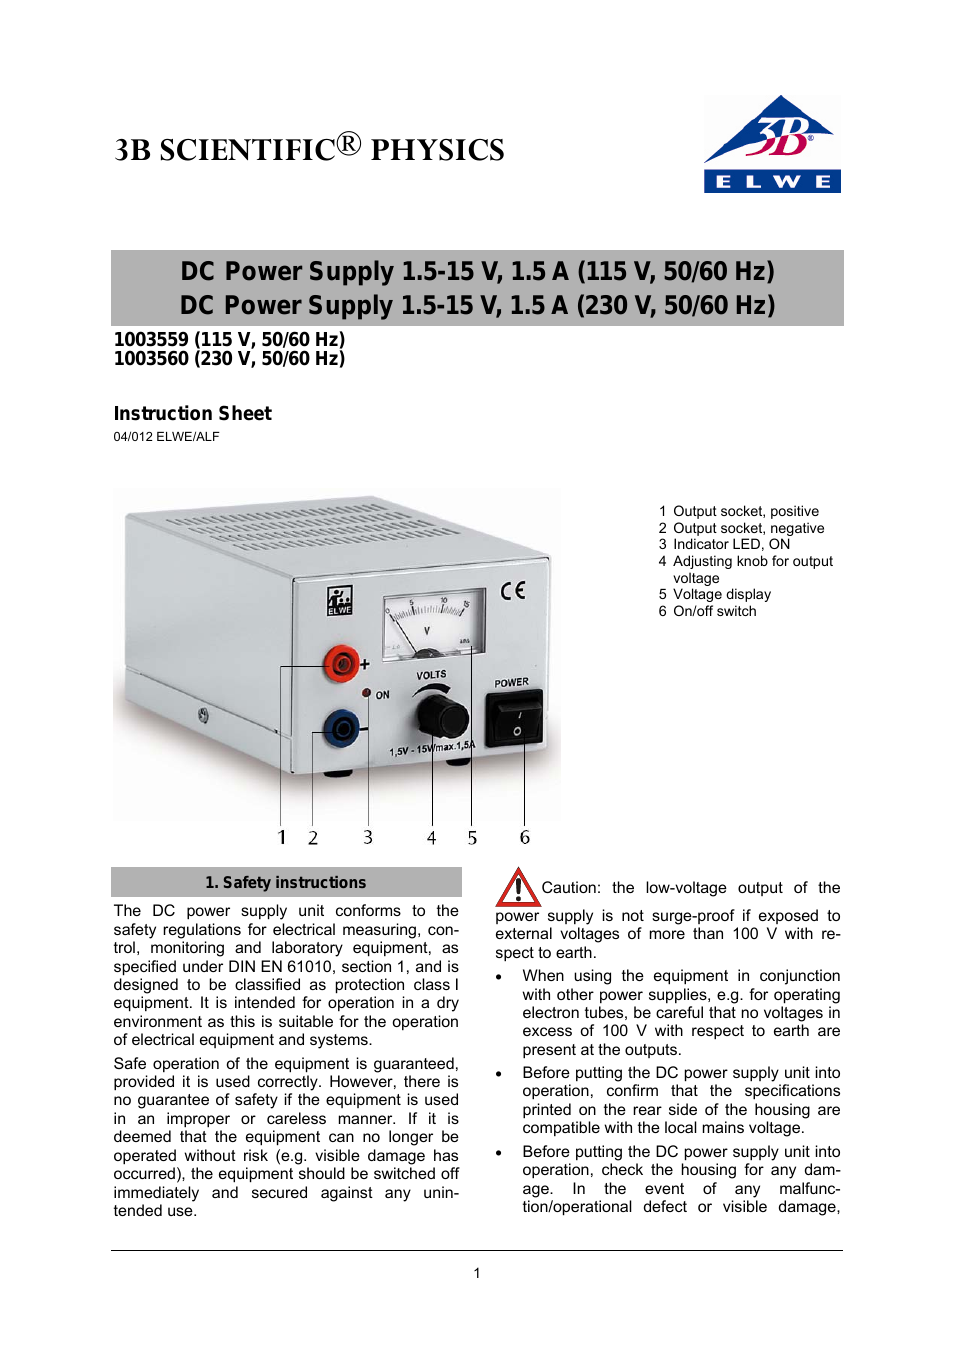 DC Power Supply 1.5-15 V, 1.5 A (115 V, 50__60 Hz)